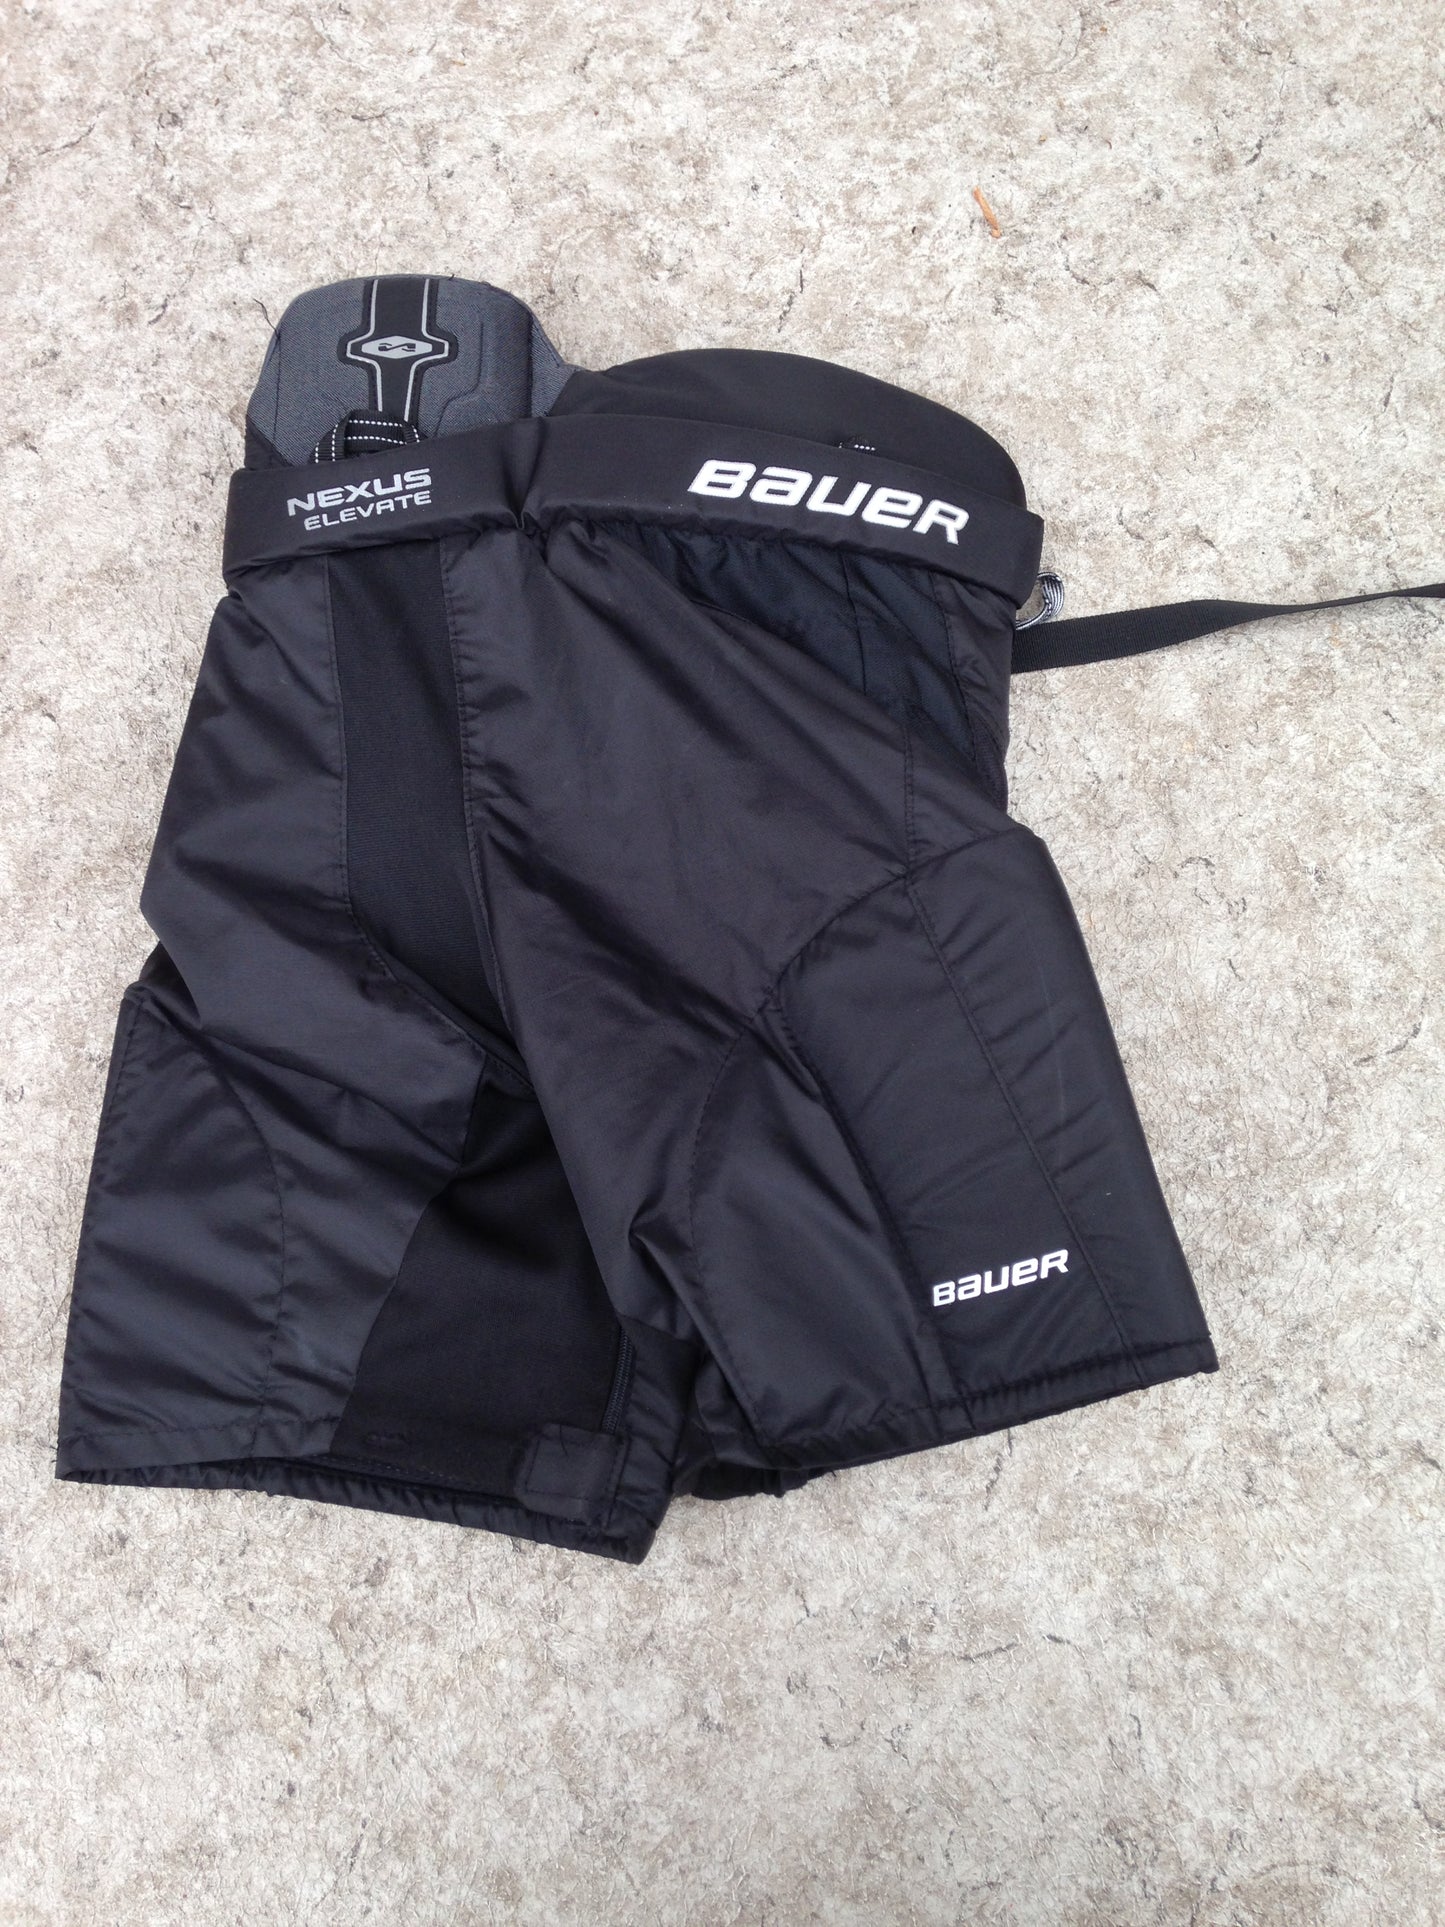 Hockey Pants Child Size Junior Large Bauer Nexus Elevate As New Excellent Black